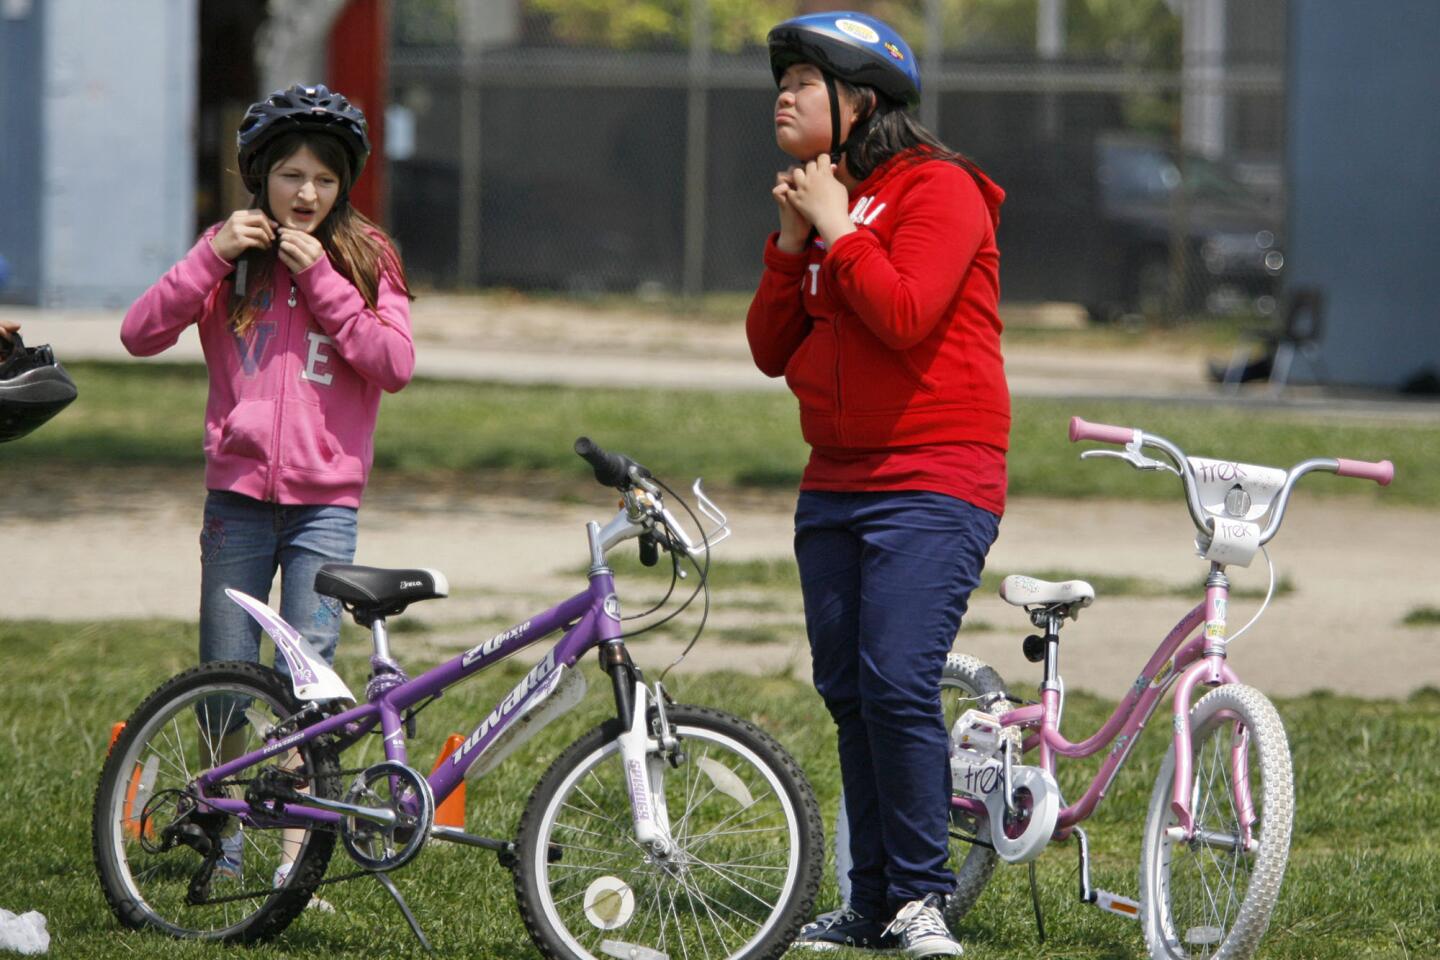 John Marshall Elementary School students learn bike safety tips